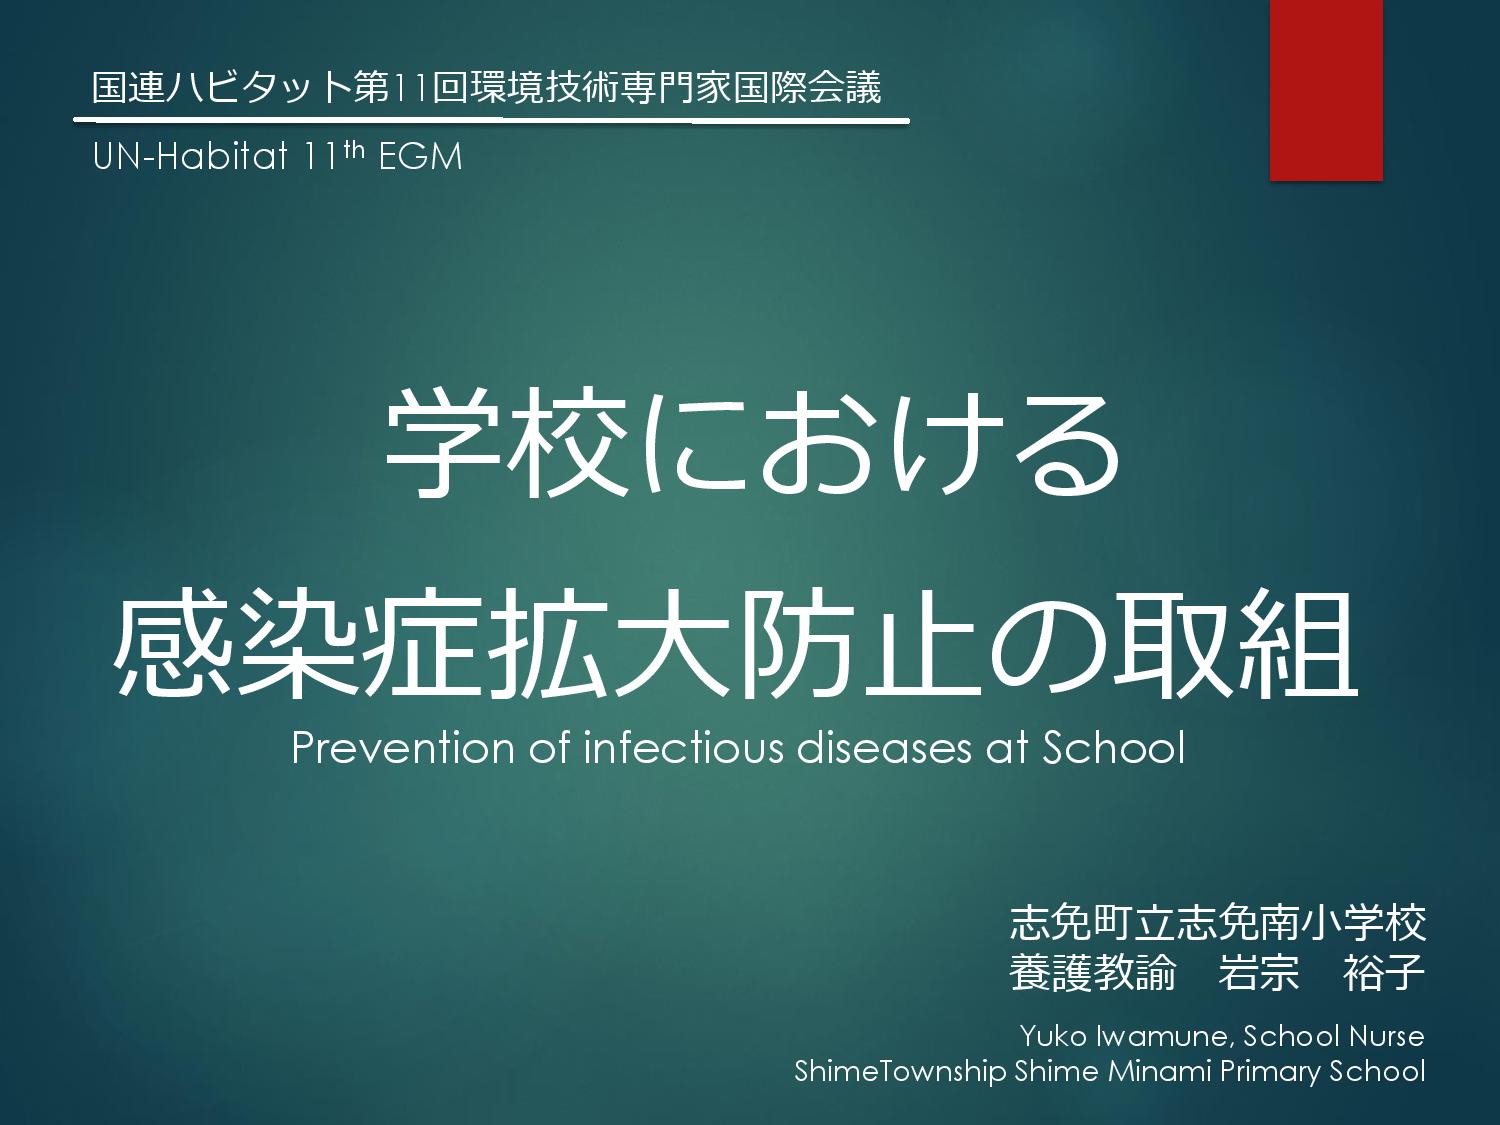 Shime Minami Elementary School: Expert Group Meeting 2020